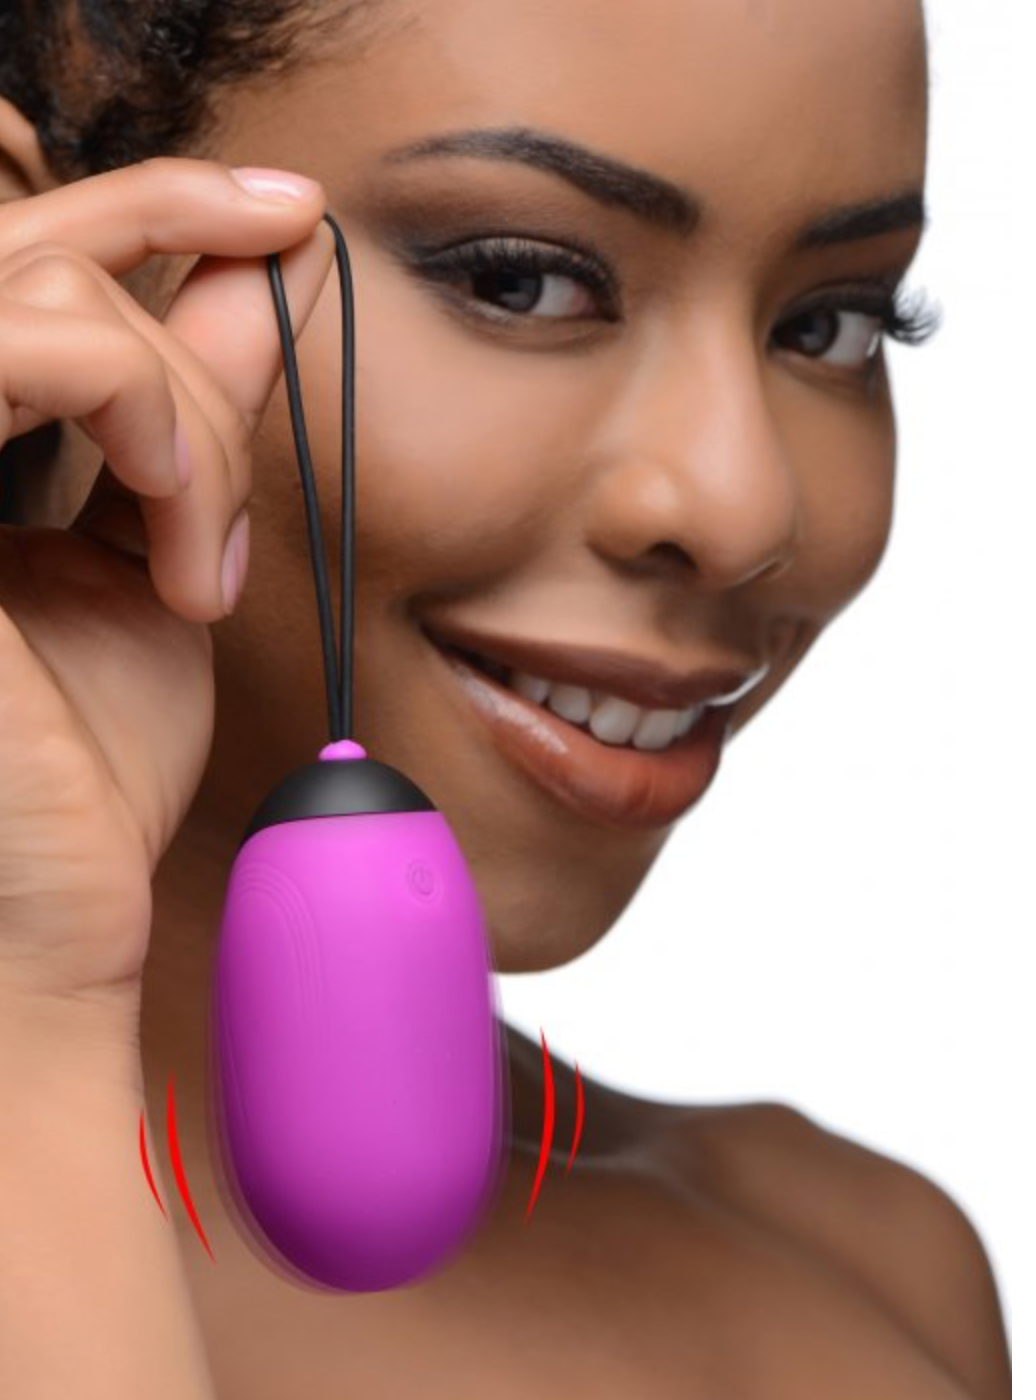 XL Silicone Vibrating Egg - Purple